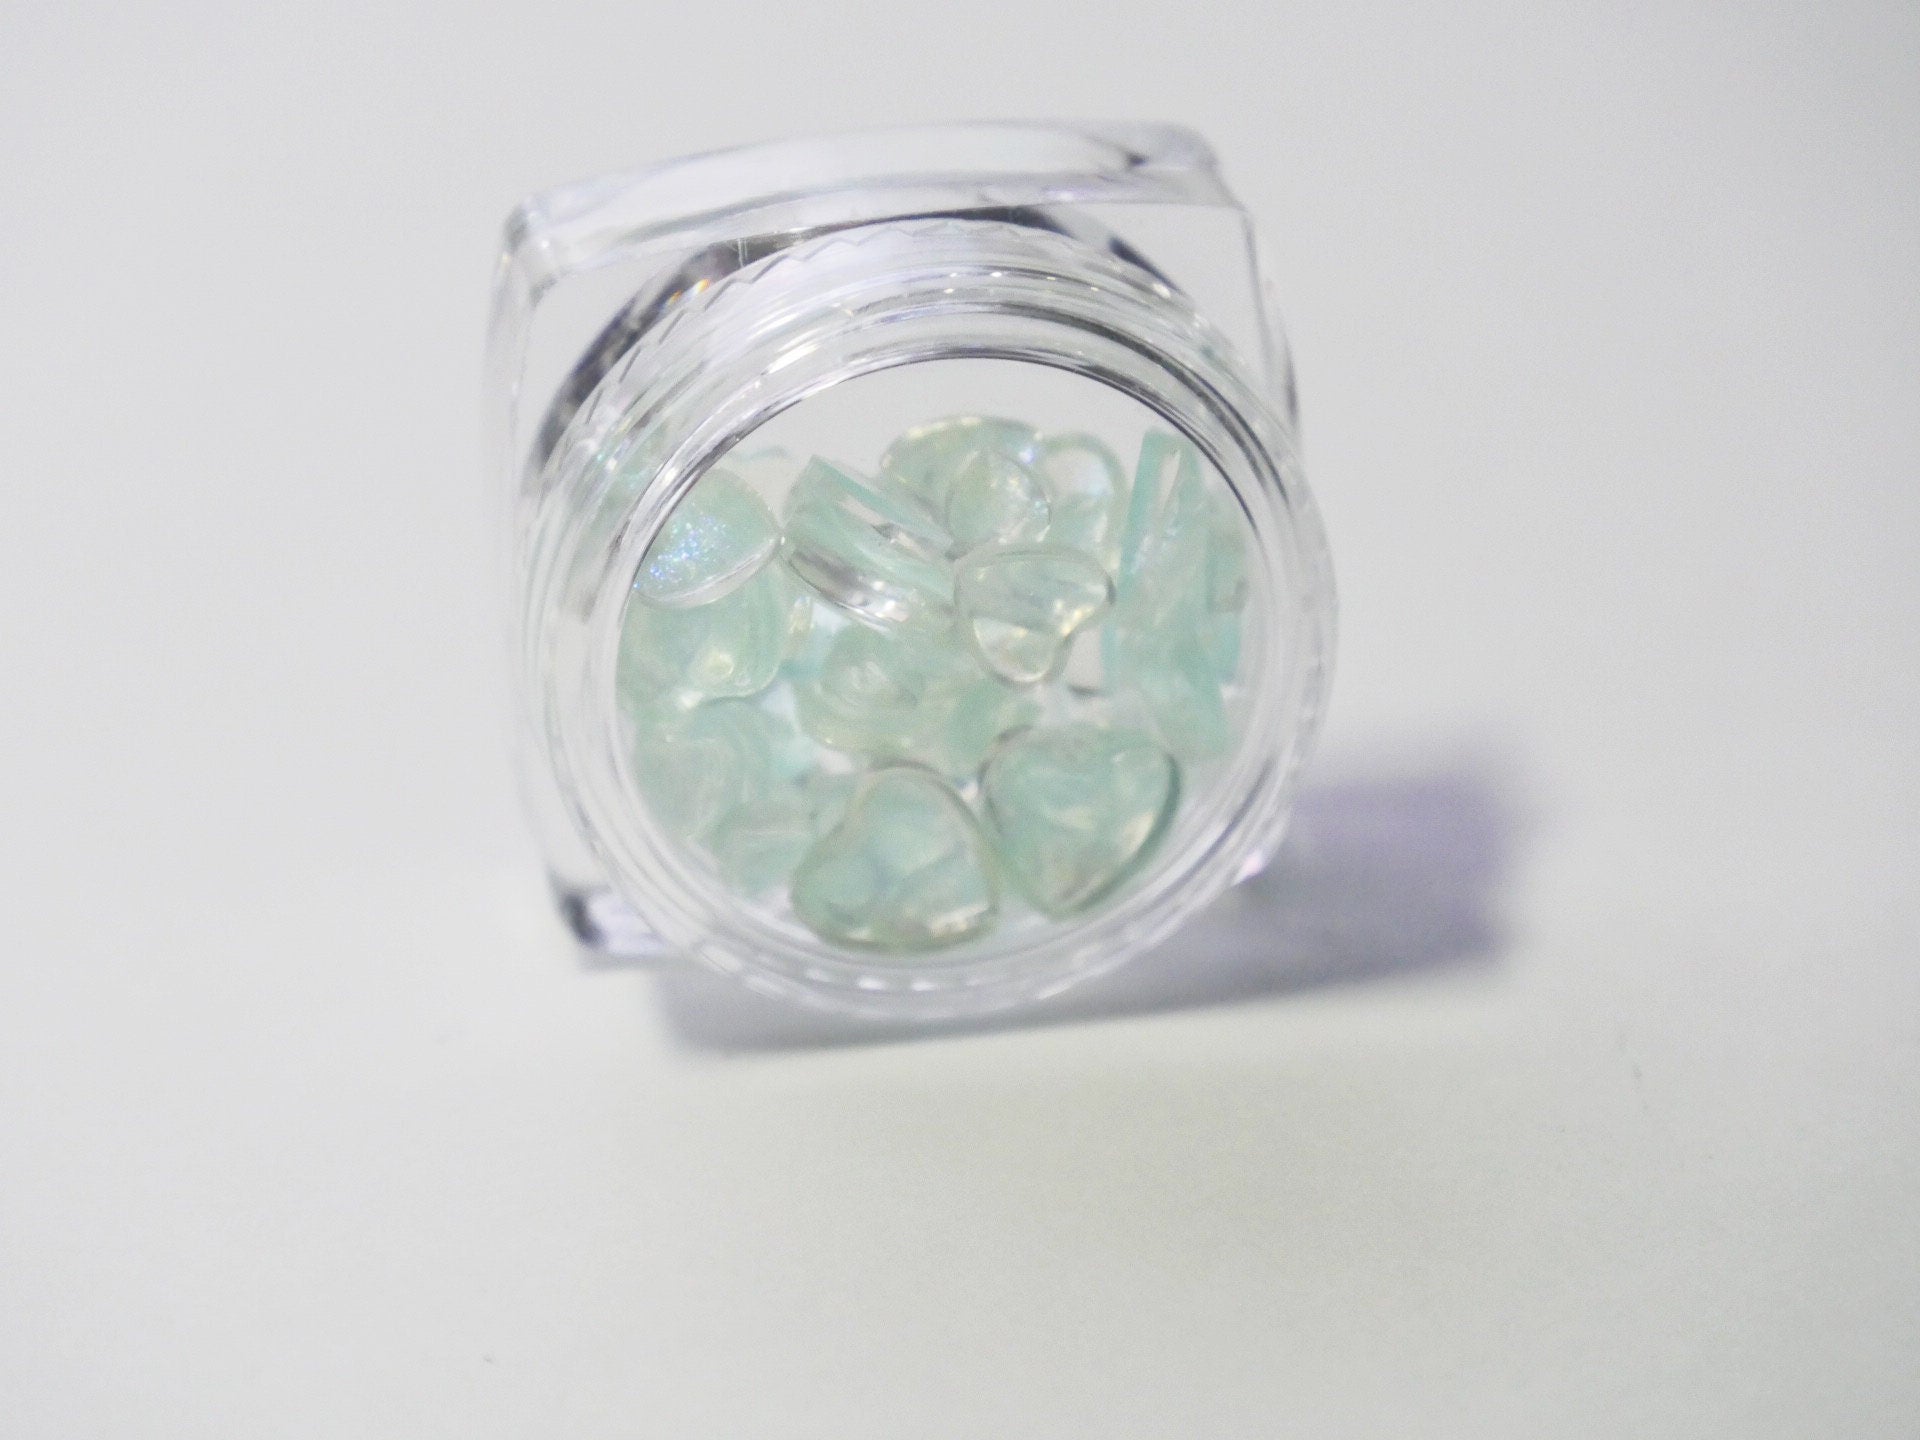 40pcs Blue Glittery Heart Shaped Nail Art/ Mint Glitter Ocean Hearts Decal nail art Charm / Luminous Mocha light-catching Beads